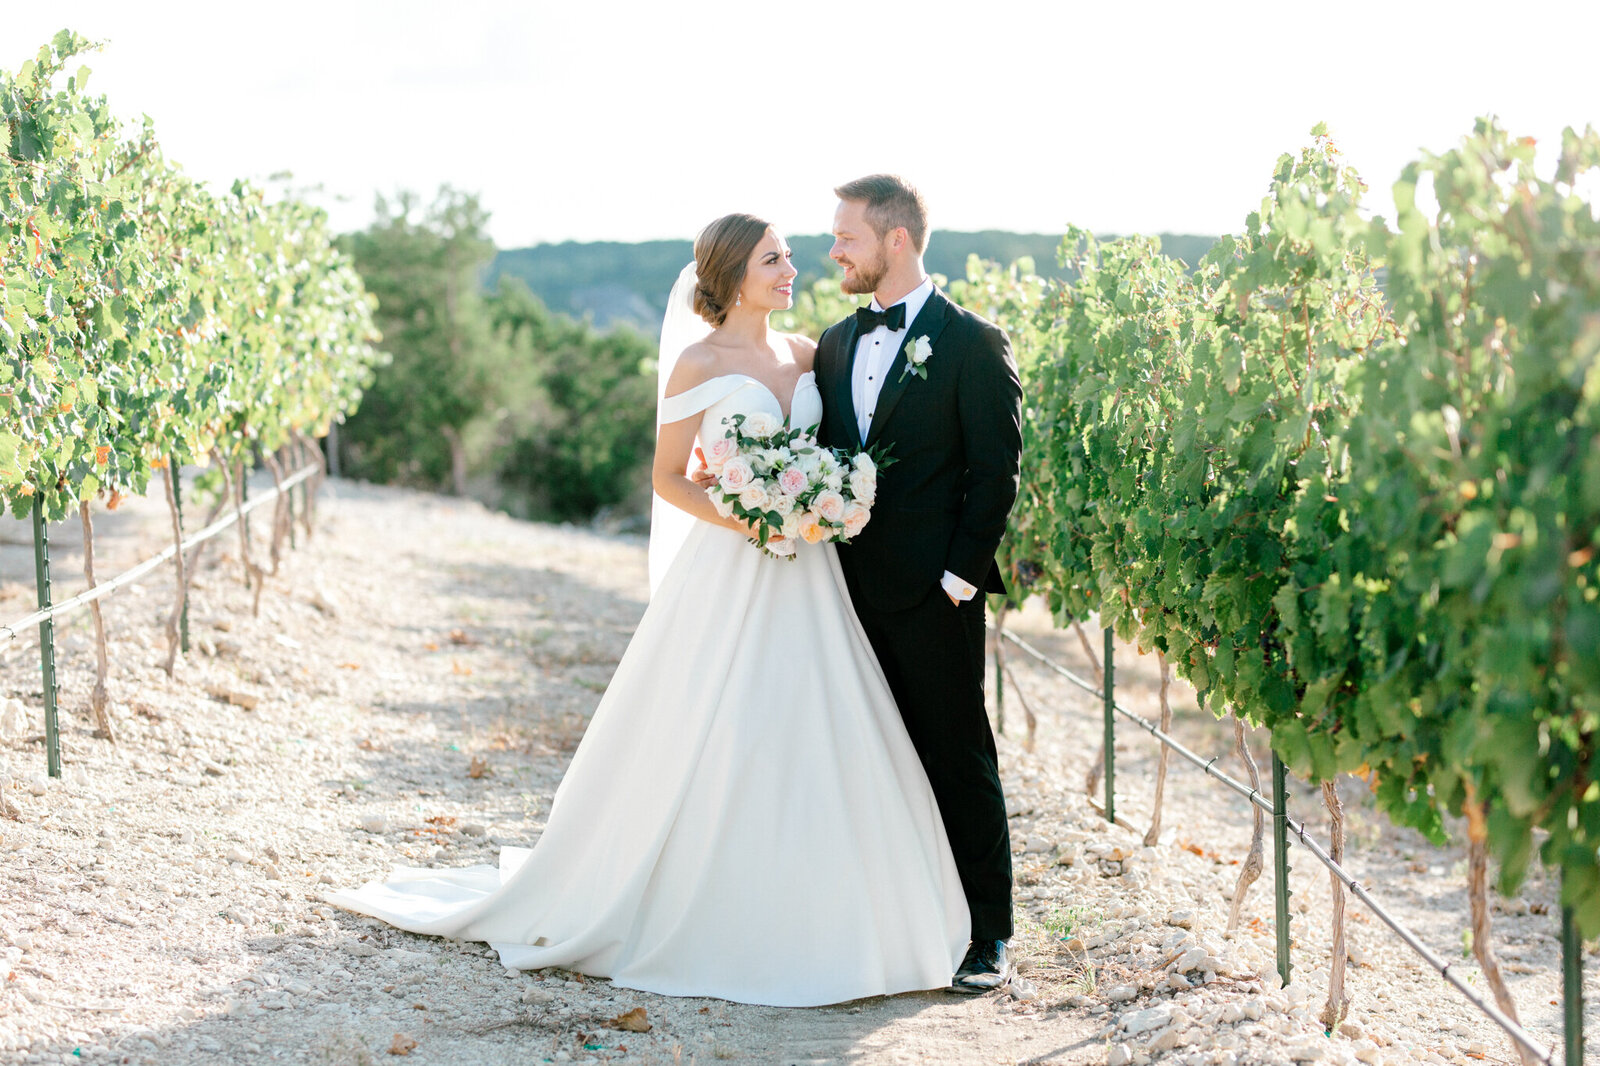 Lexi Broughton & Garrett Greer Wedding at Dove Ridge Vineyards | Sami Kathryn Photography | Dallas Wedding Photography-126